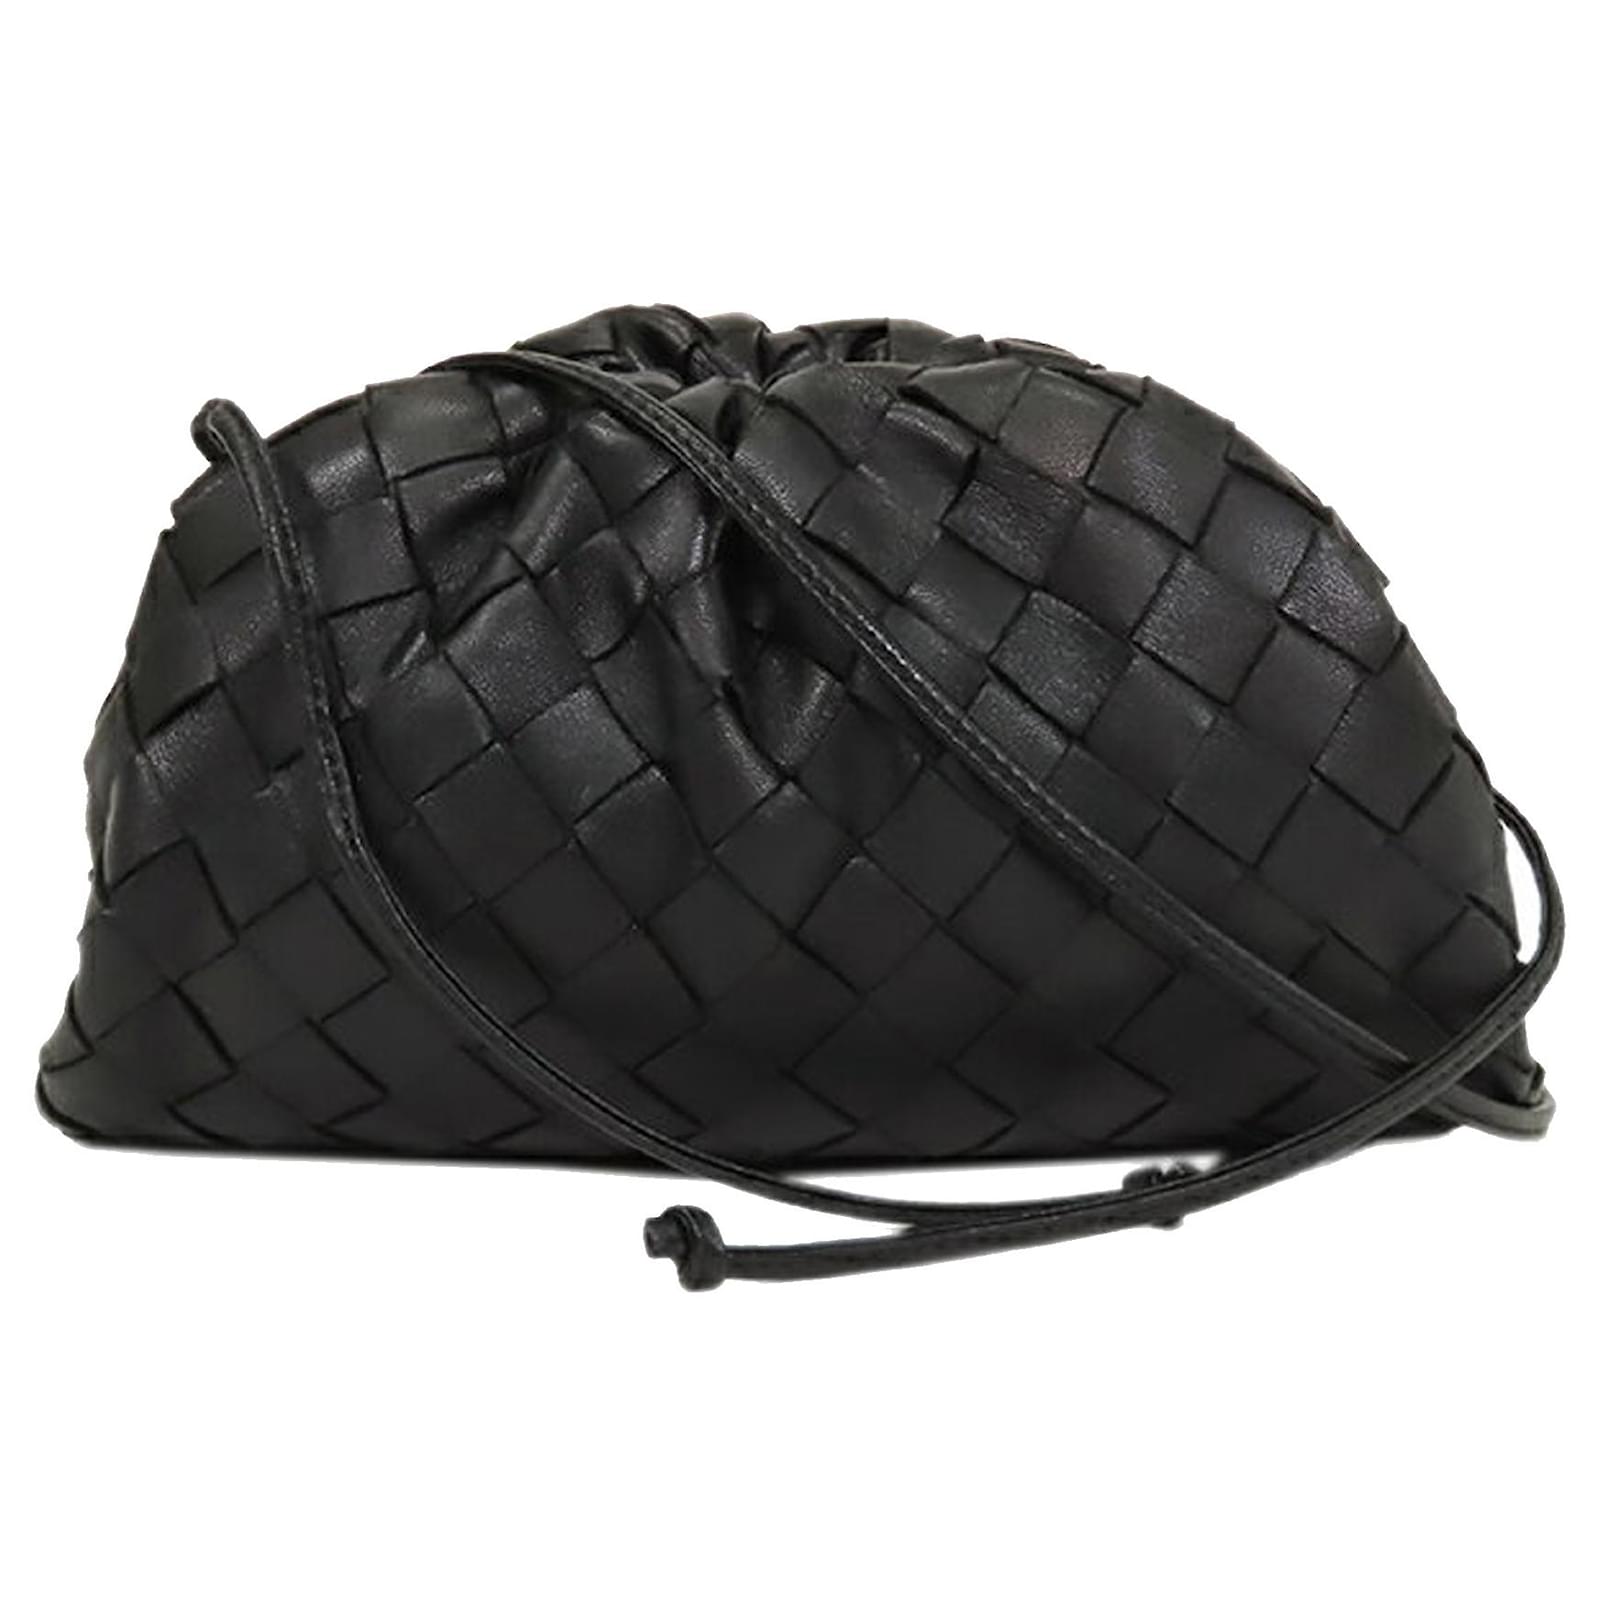 Bottega Veneta black the pouch 20 leather shoulder bag